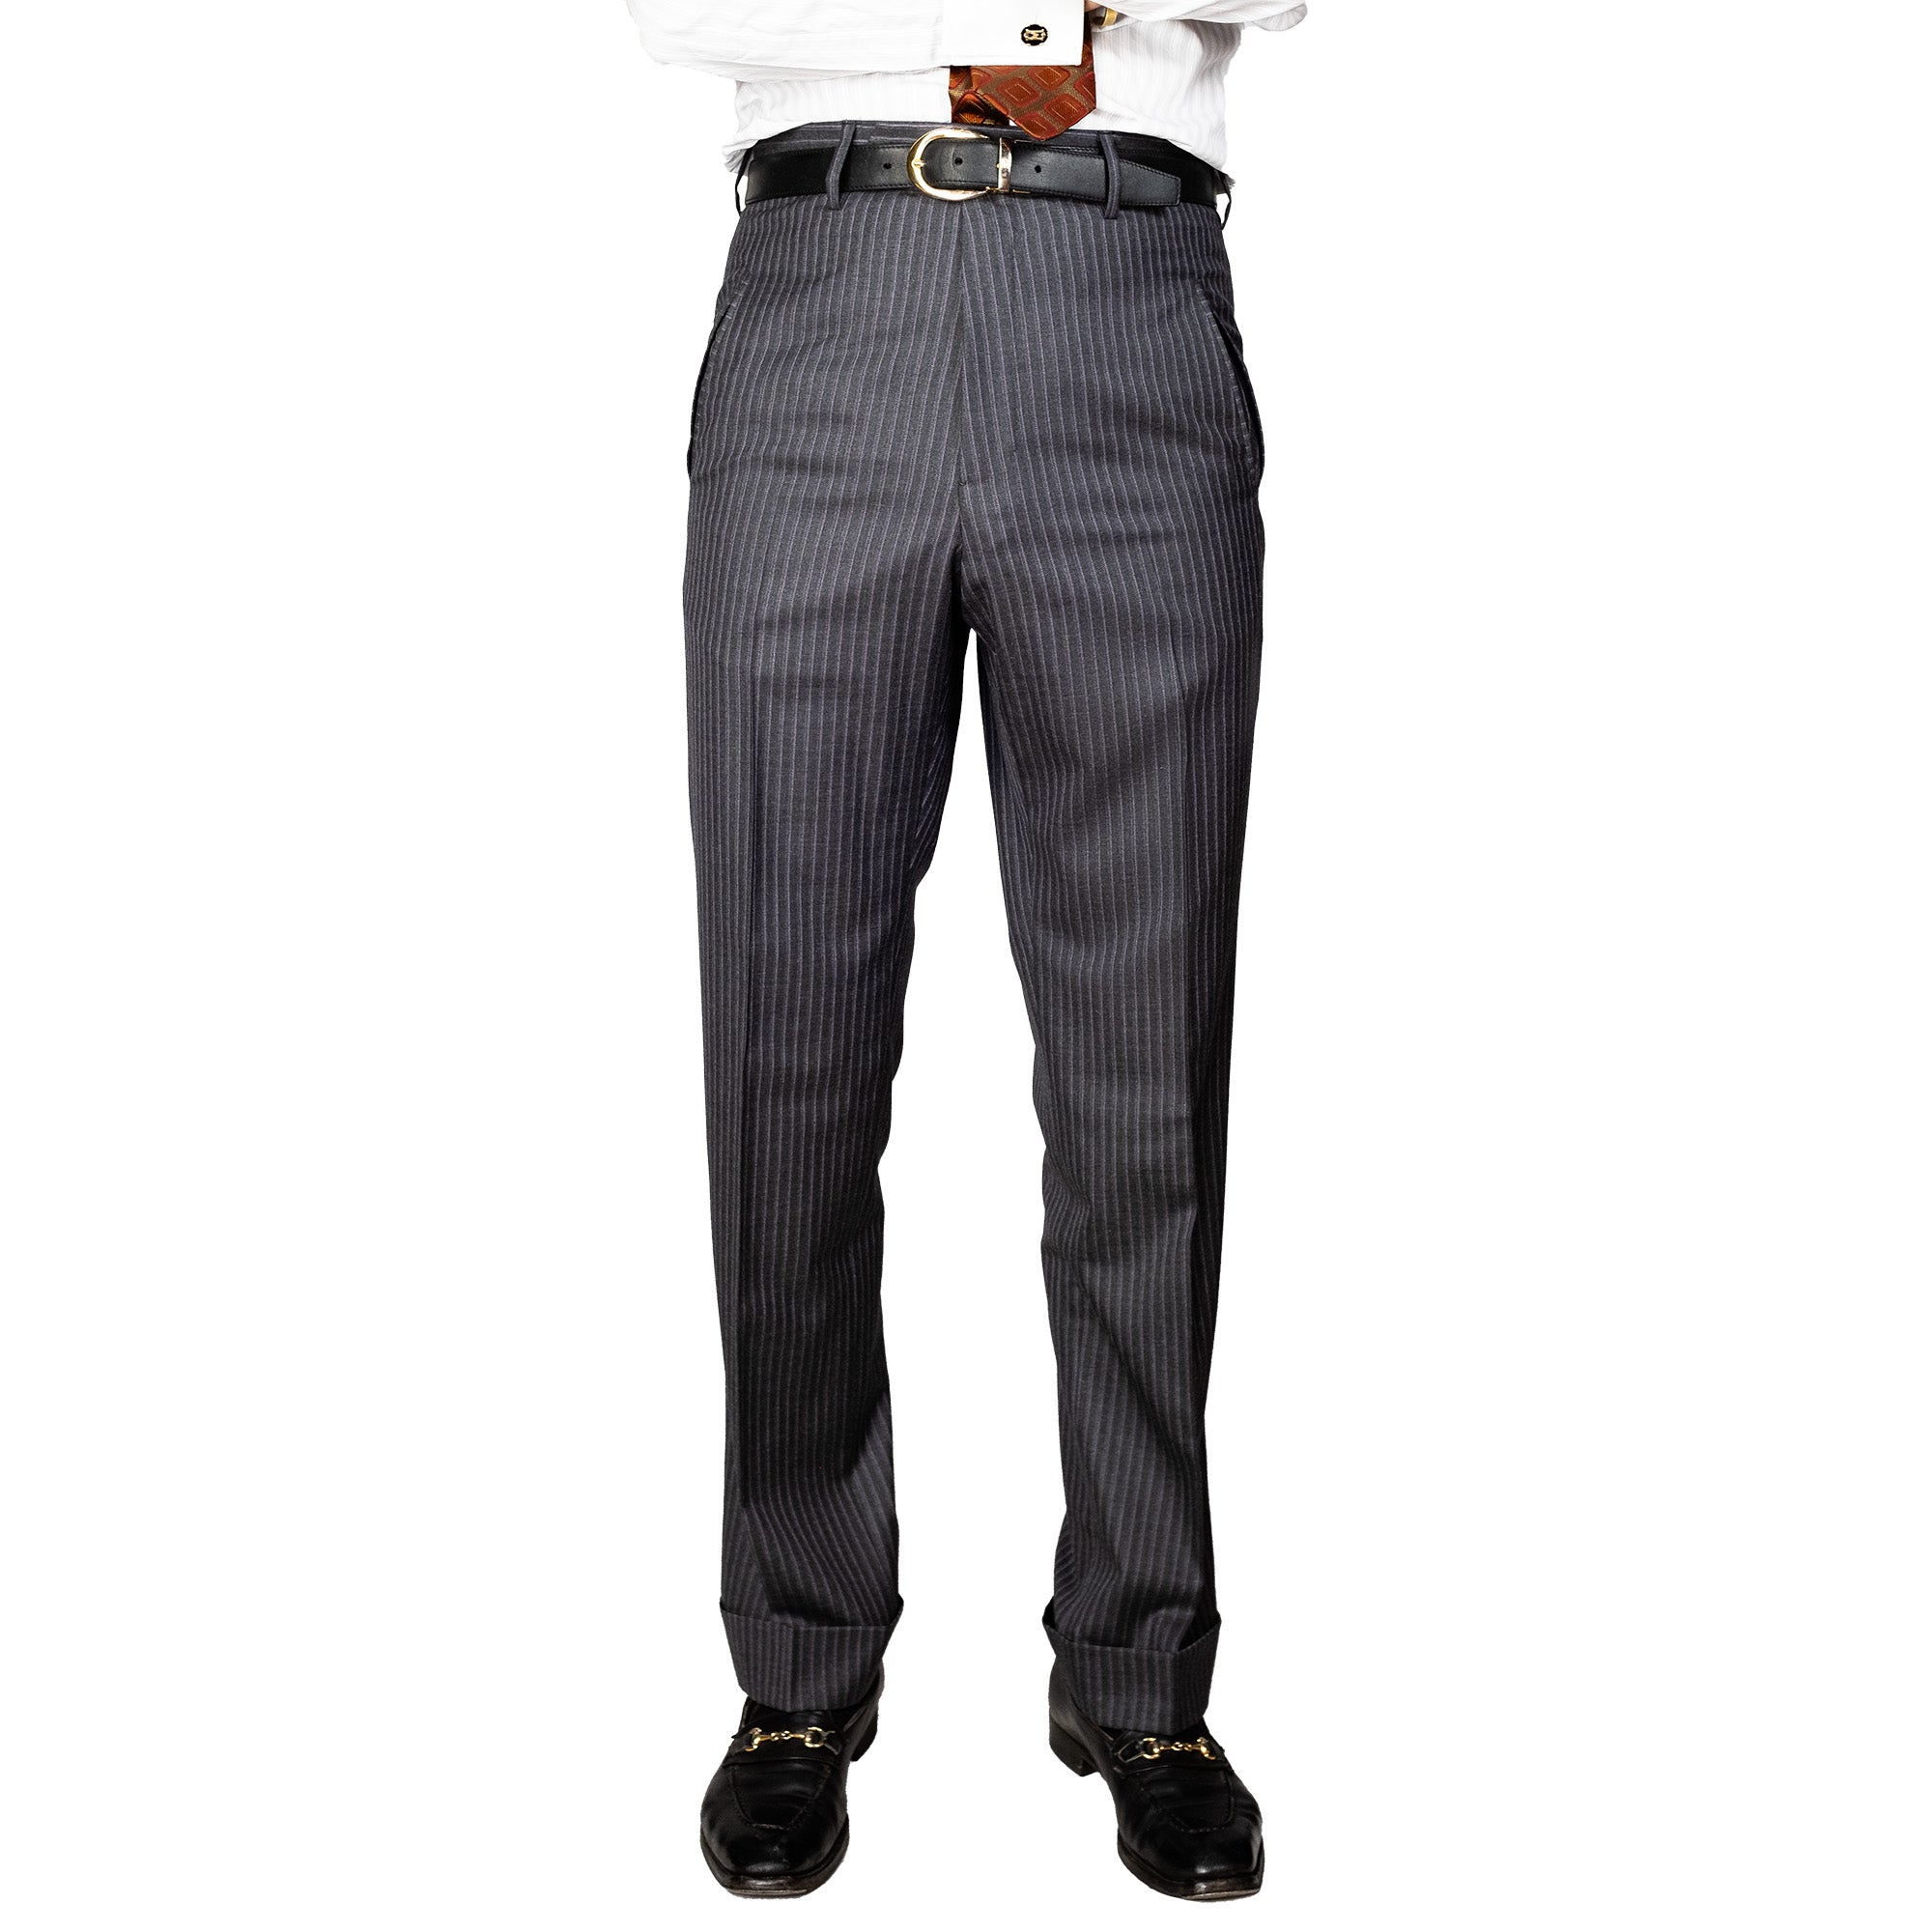 Suit (fully-handmade) - Dark grey multi-stripe (S140)